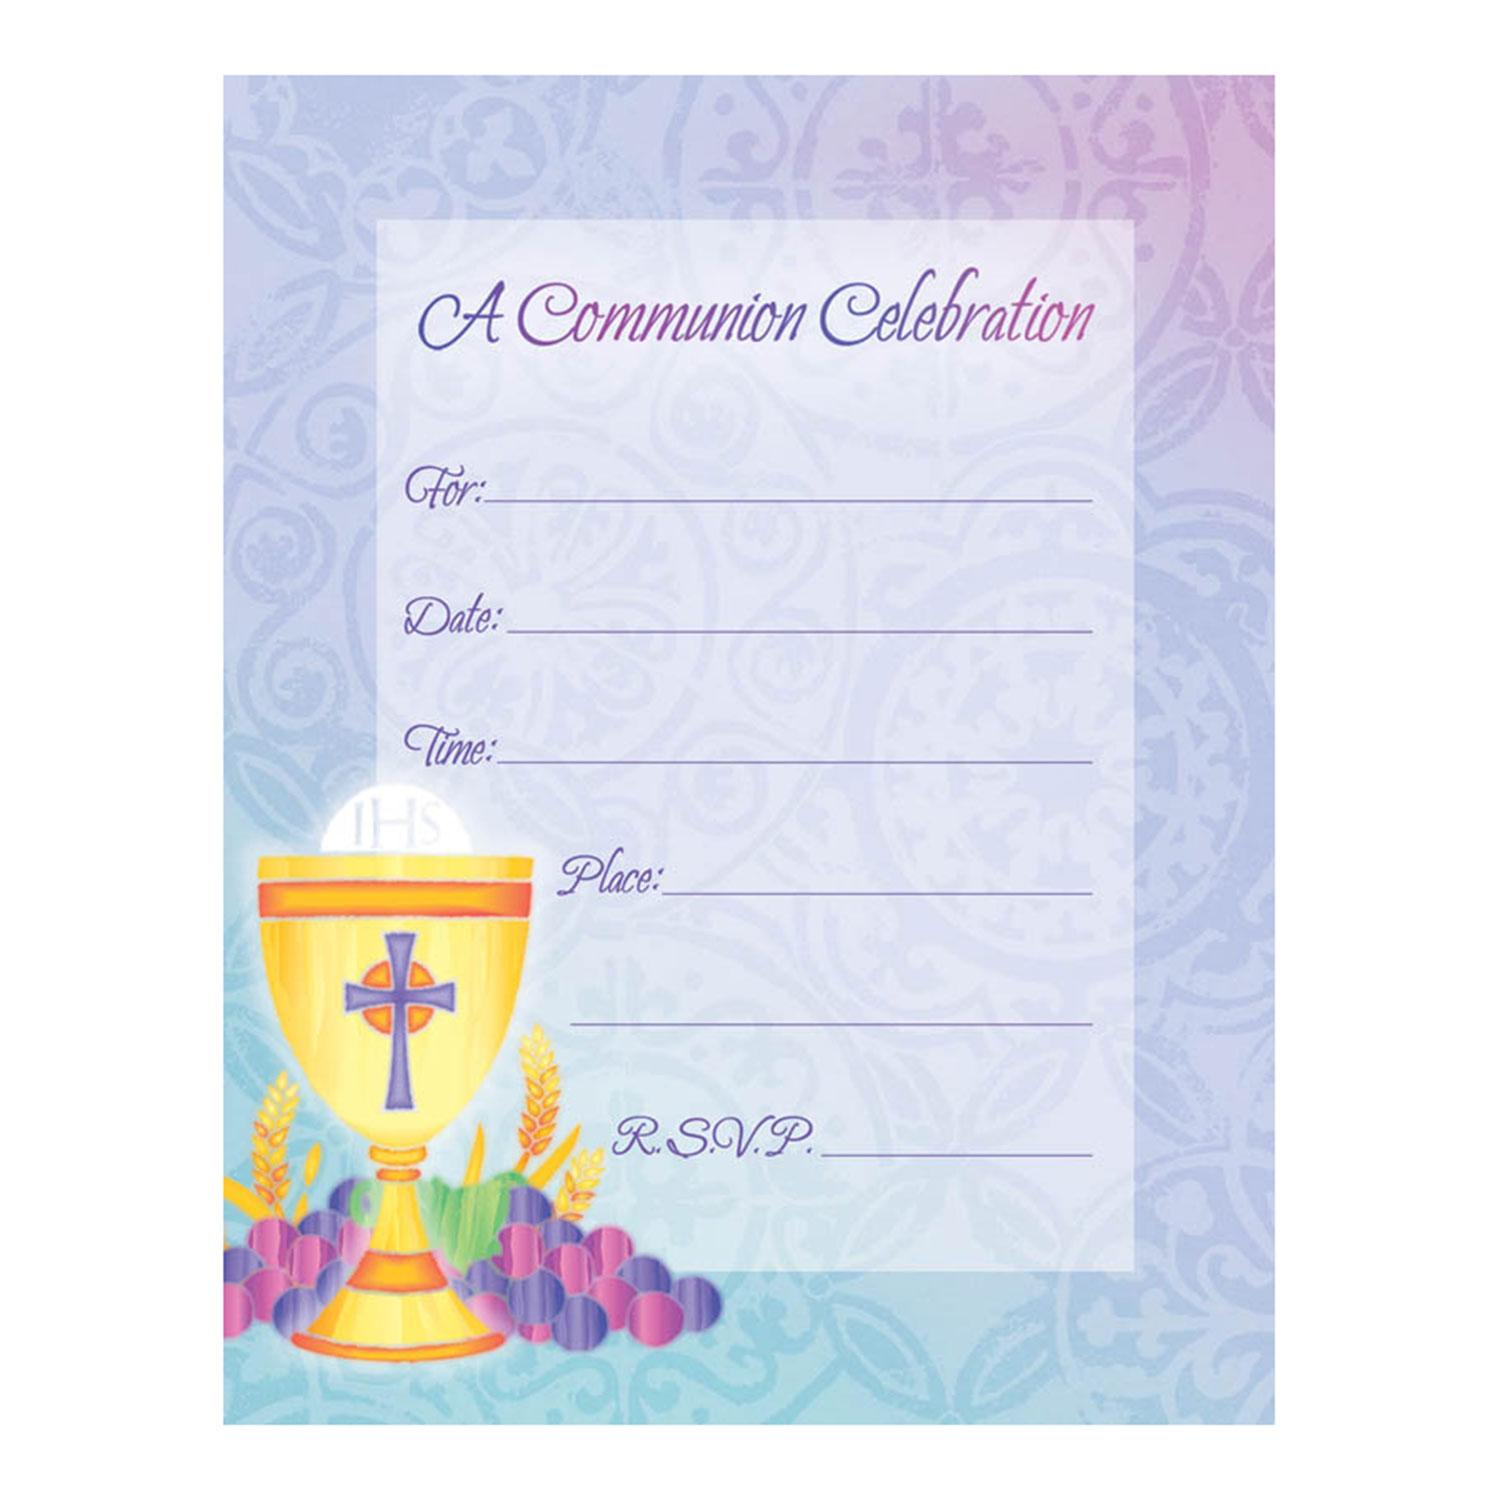 Communion Value Pack Invitations 20pcs Party Accessories - Party Centre